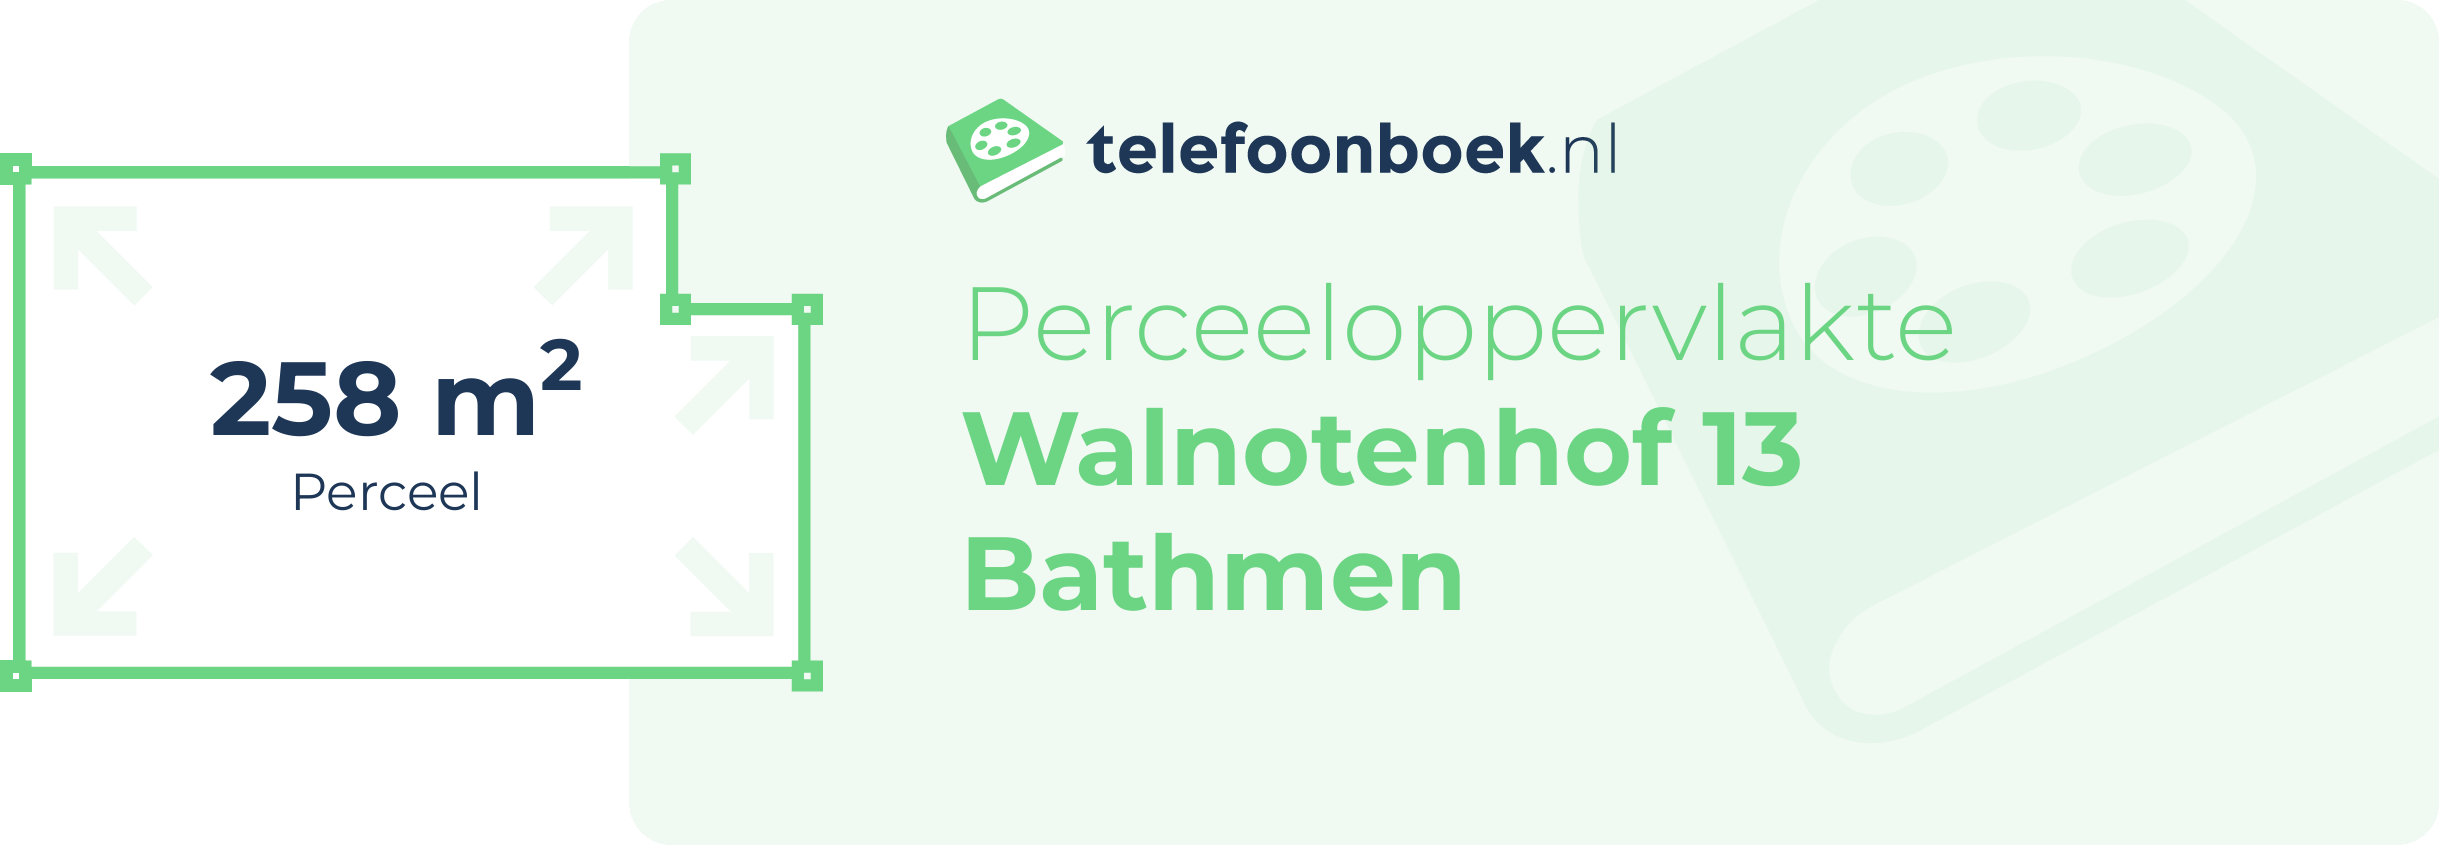 Perceeloppervlakte Walnotenhof 13 Bathmen